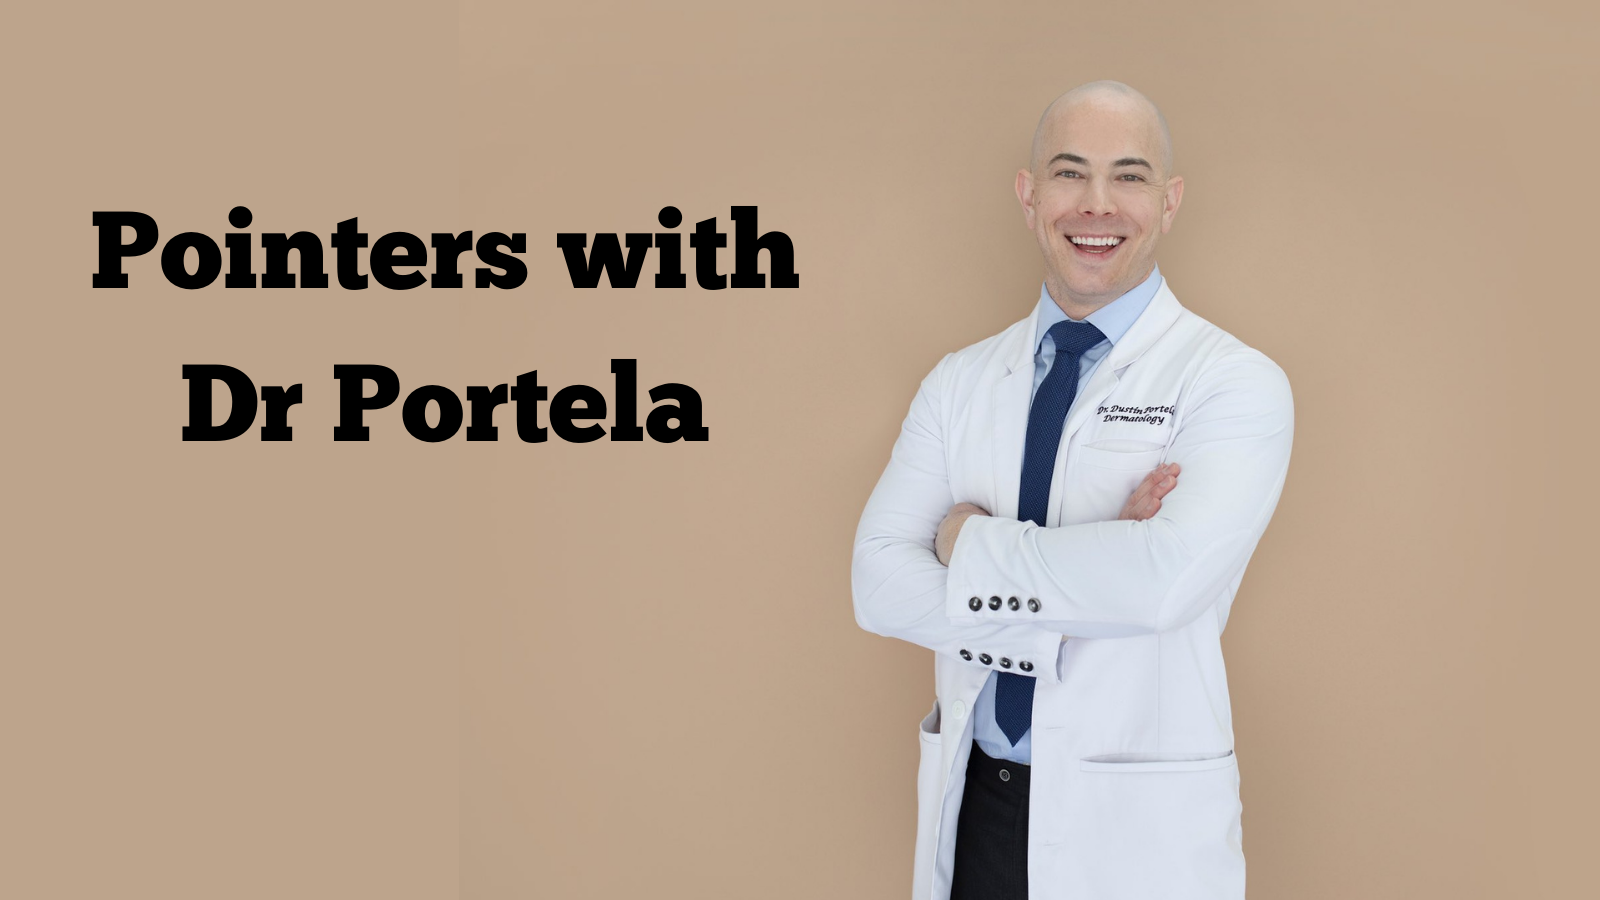 Pointers With Dr Portela: Interview with Josh Zeichner, MD 